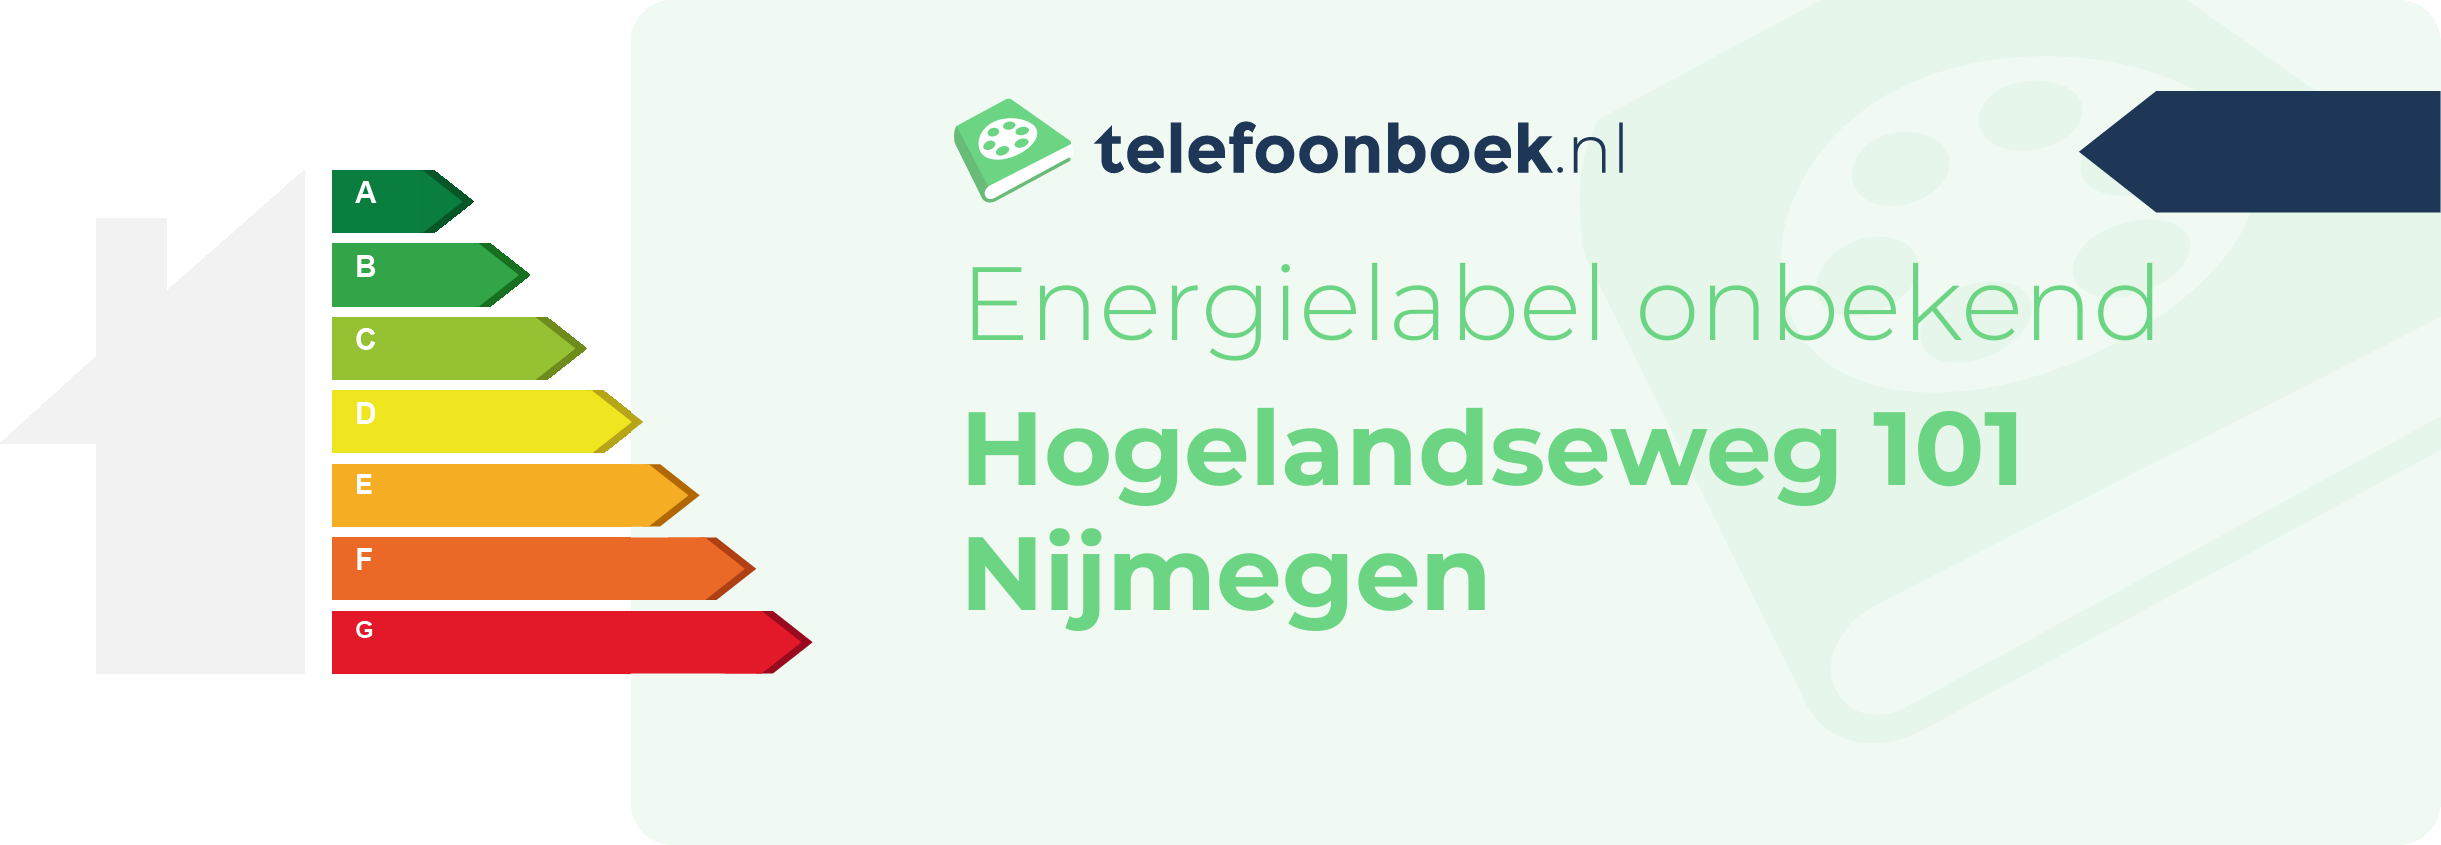 Energielabel Hogelandseweg 101 Nijmegen